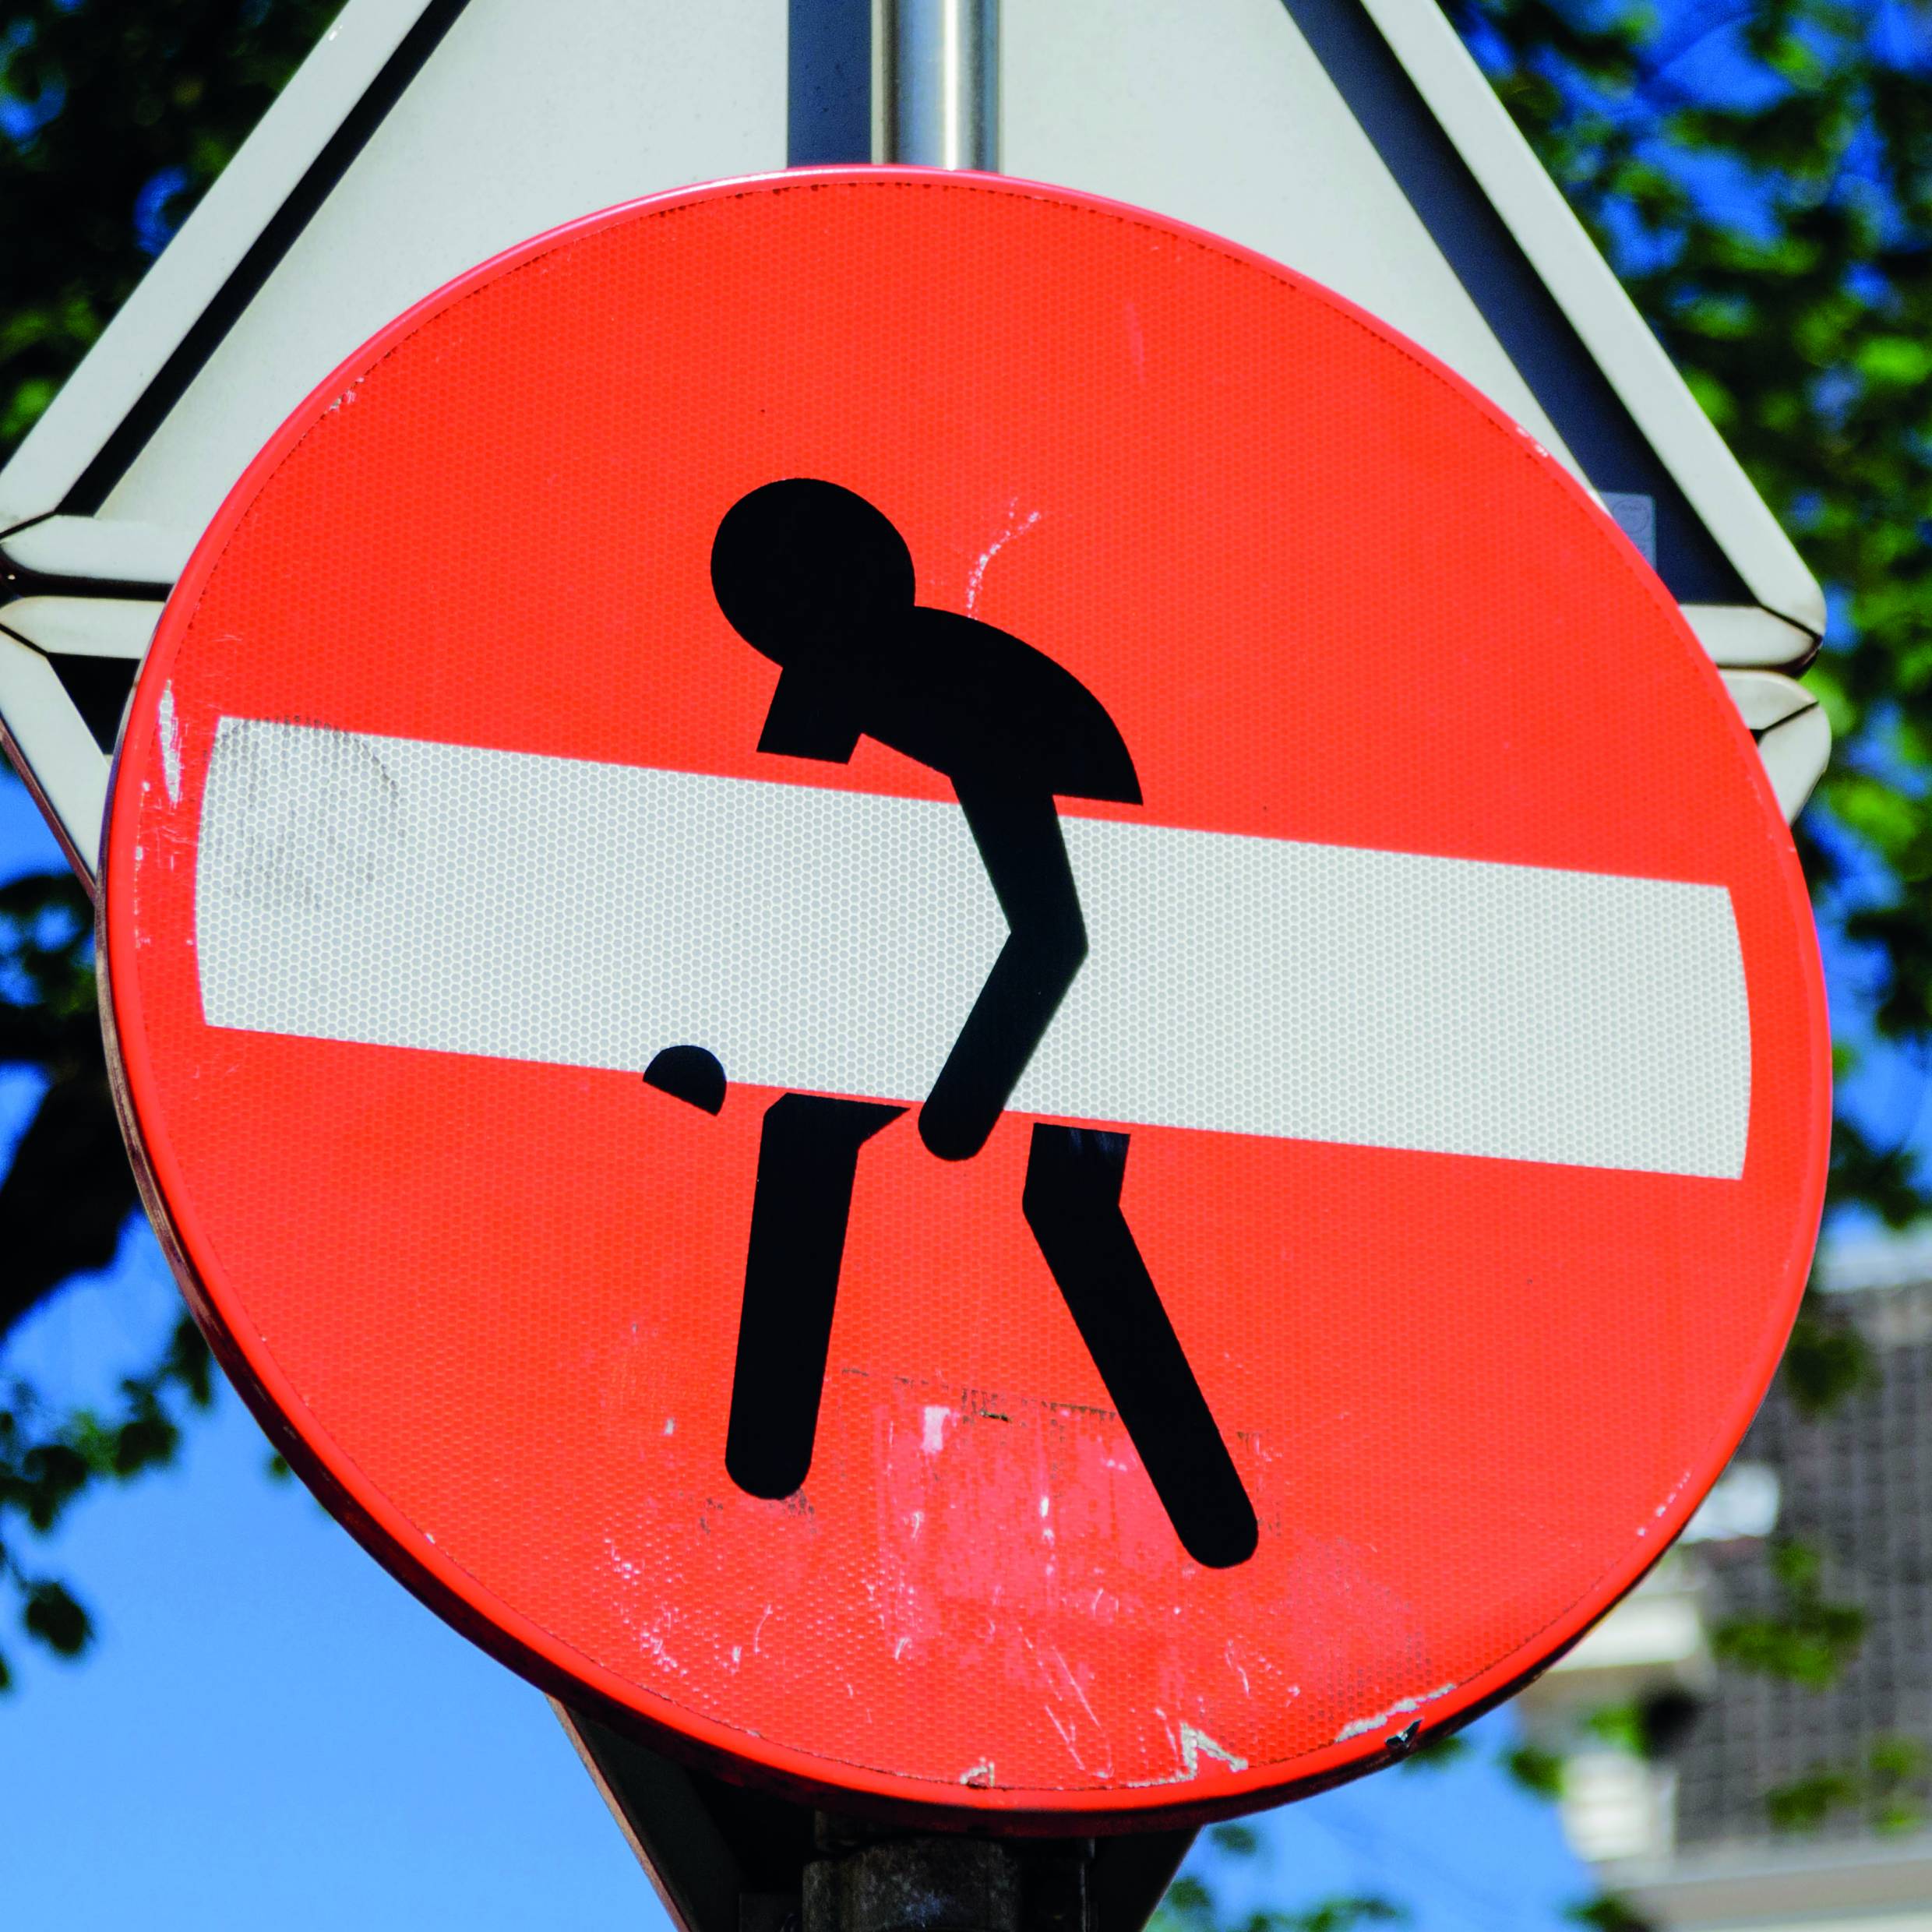 2023 Danger!.     Hilarious Road Signs Ahead - Square Wall Calendar